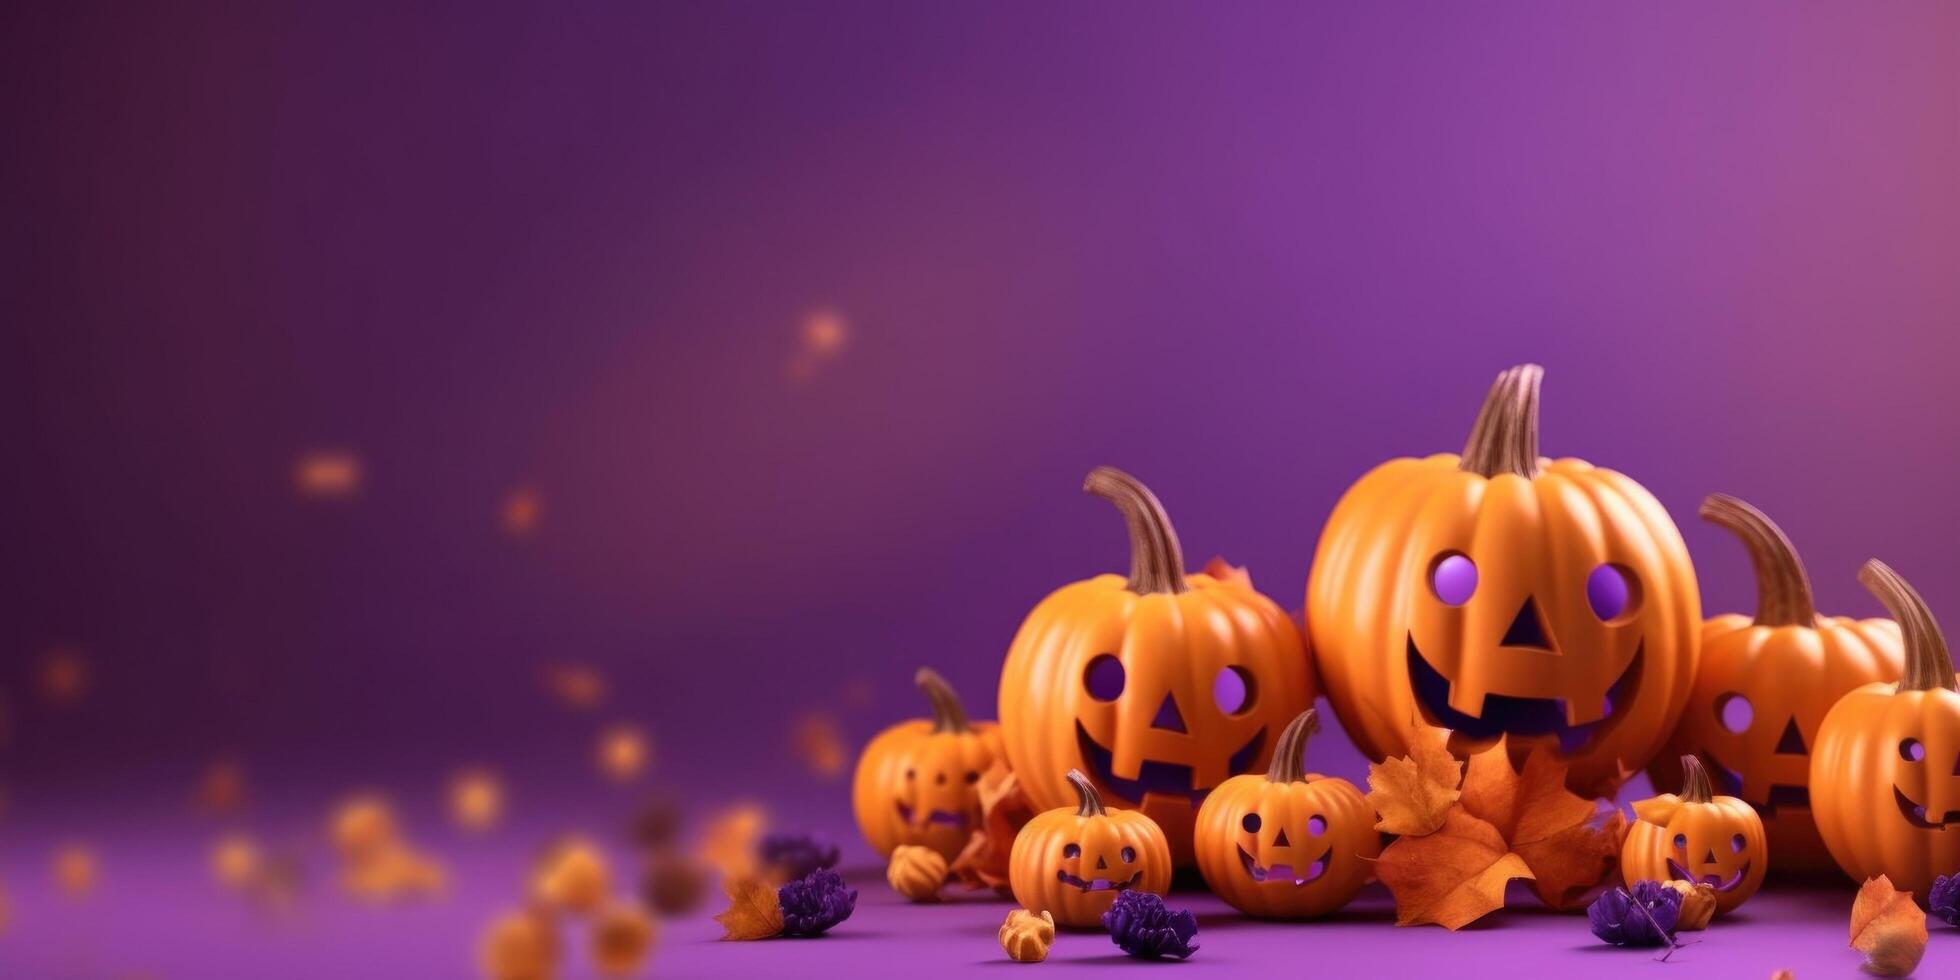 Violet Halloween Background. Illustration photo